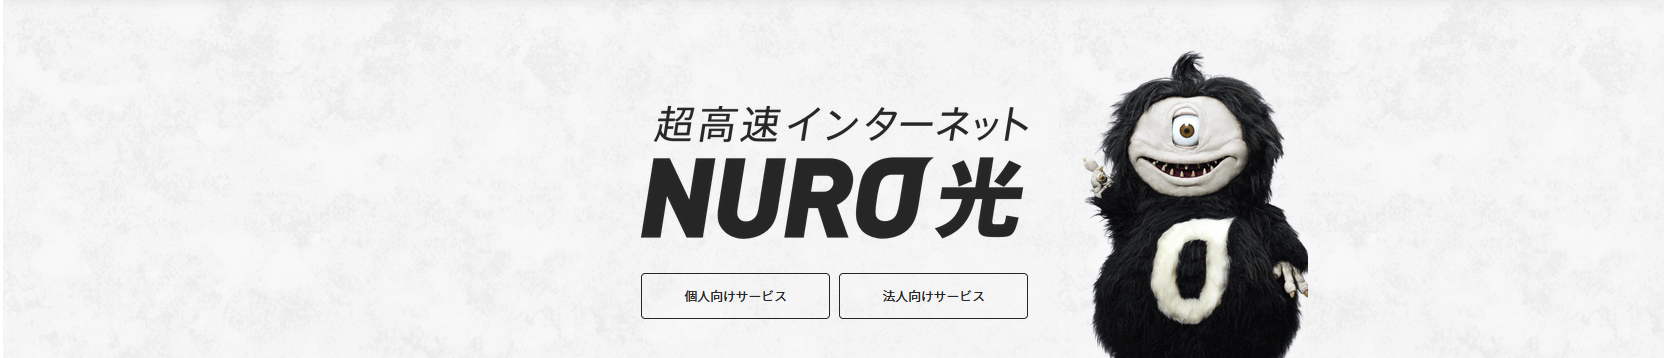 NURO 光 アイキャッチ